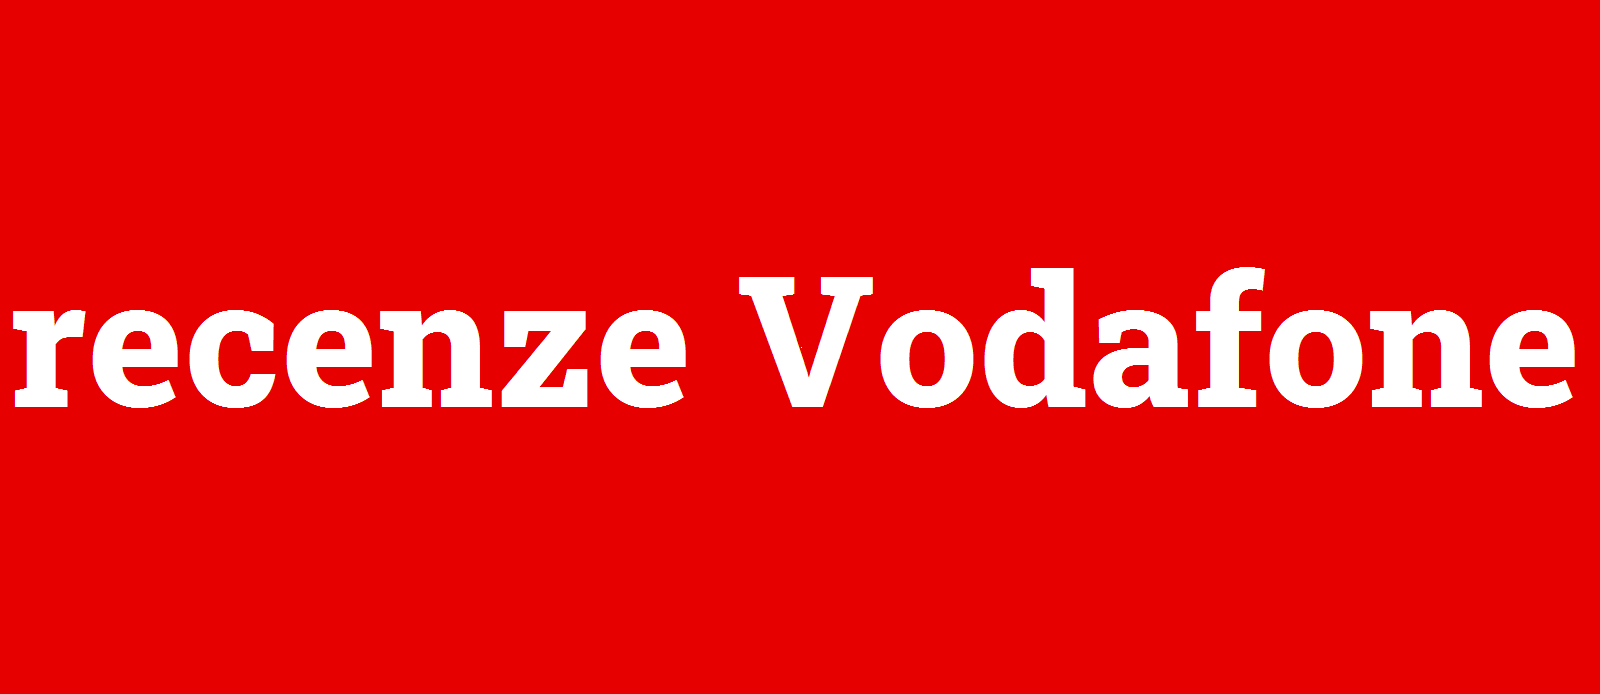 recenze Vodafone.png